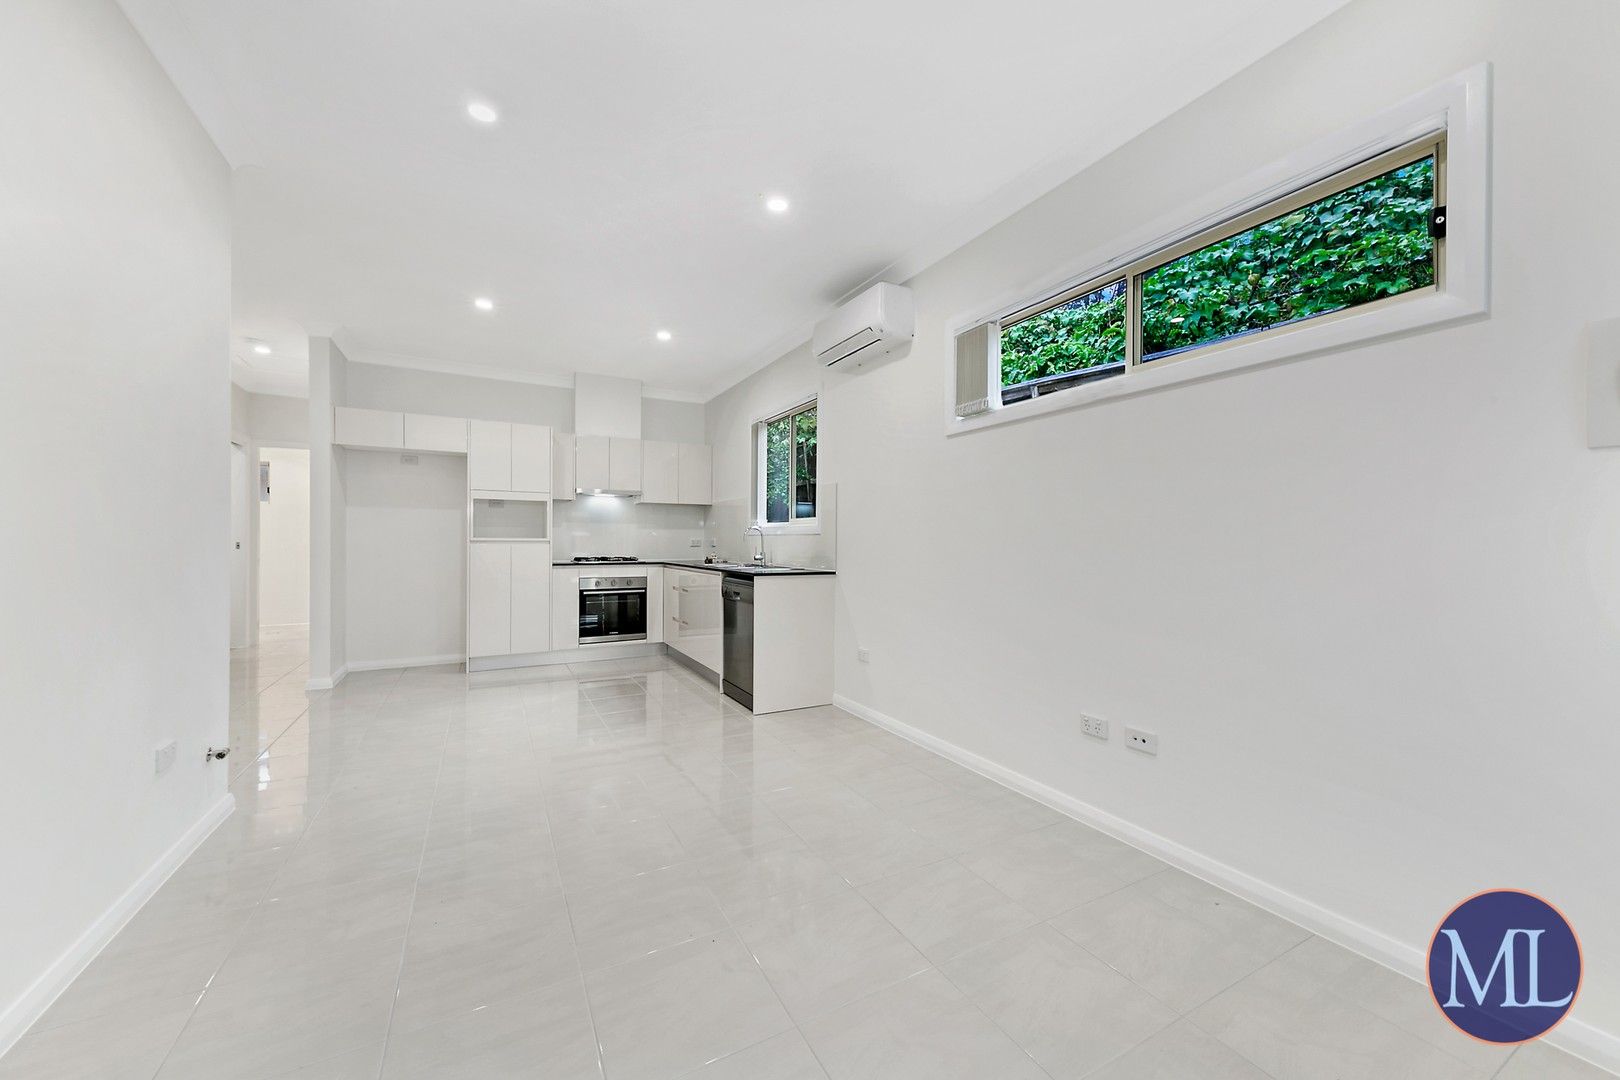 2 bedrooms Apartment / Unit / Flat in 11B Greenoaks Avenue CHERRYBROOK NSW, 2126